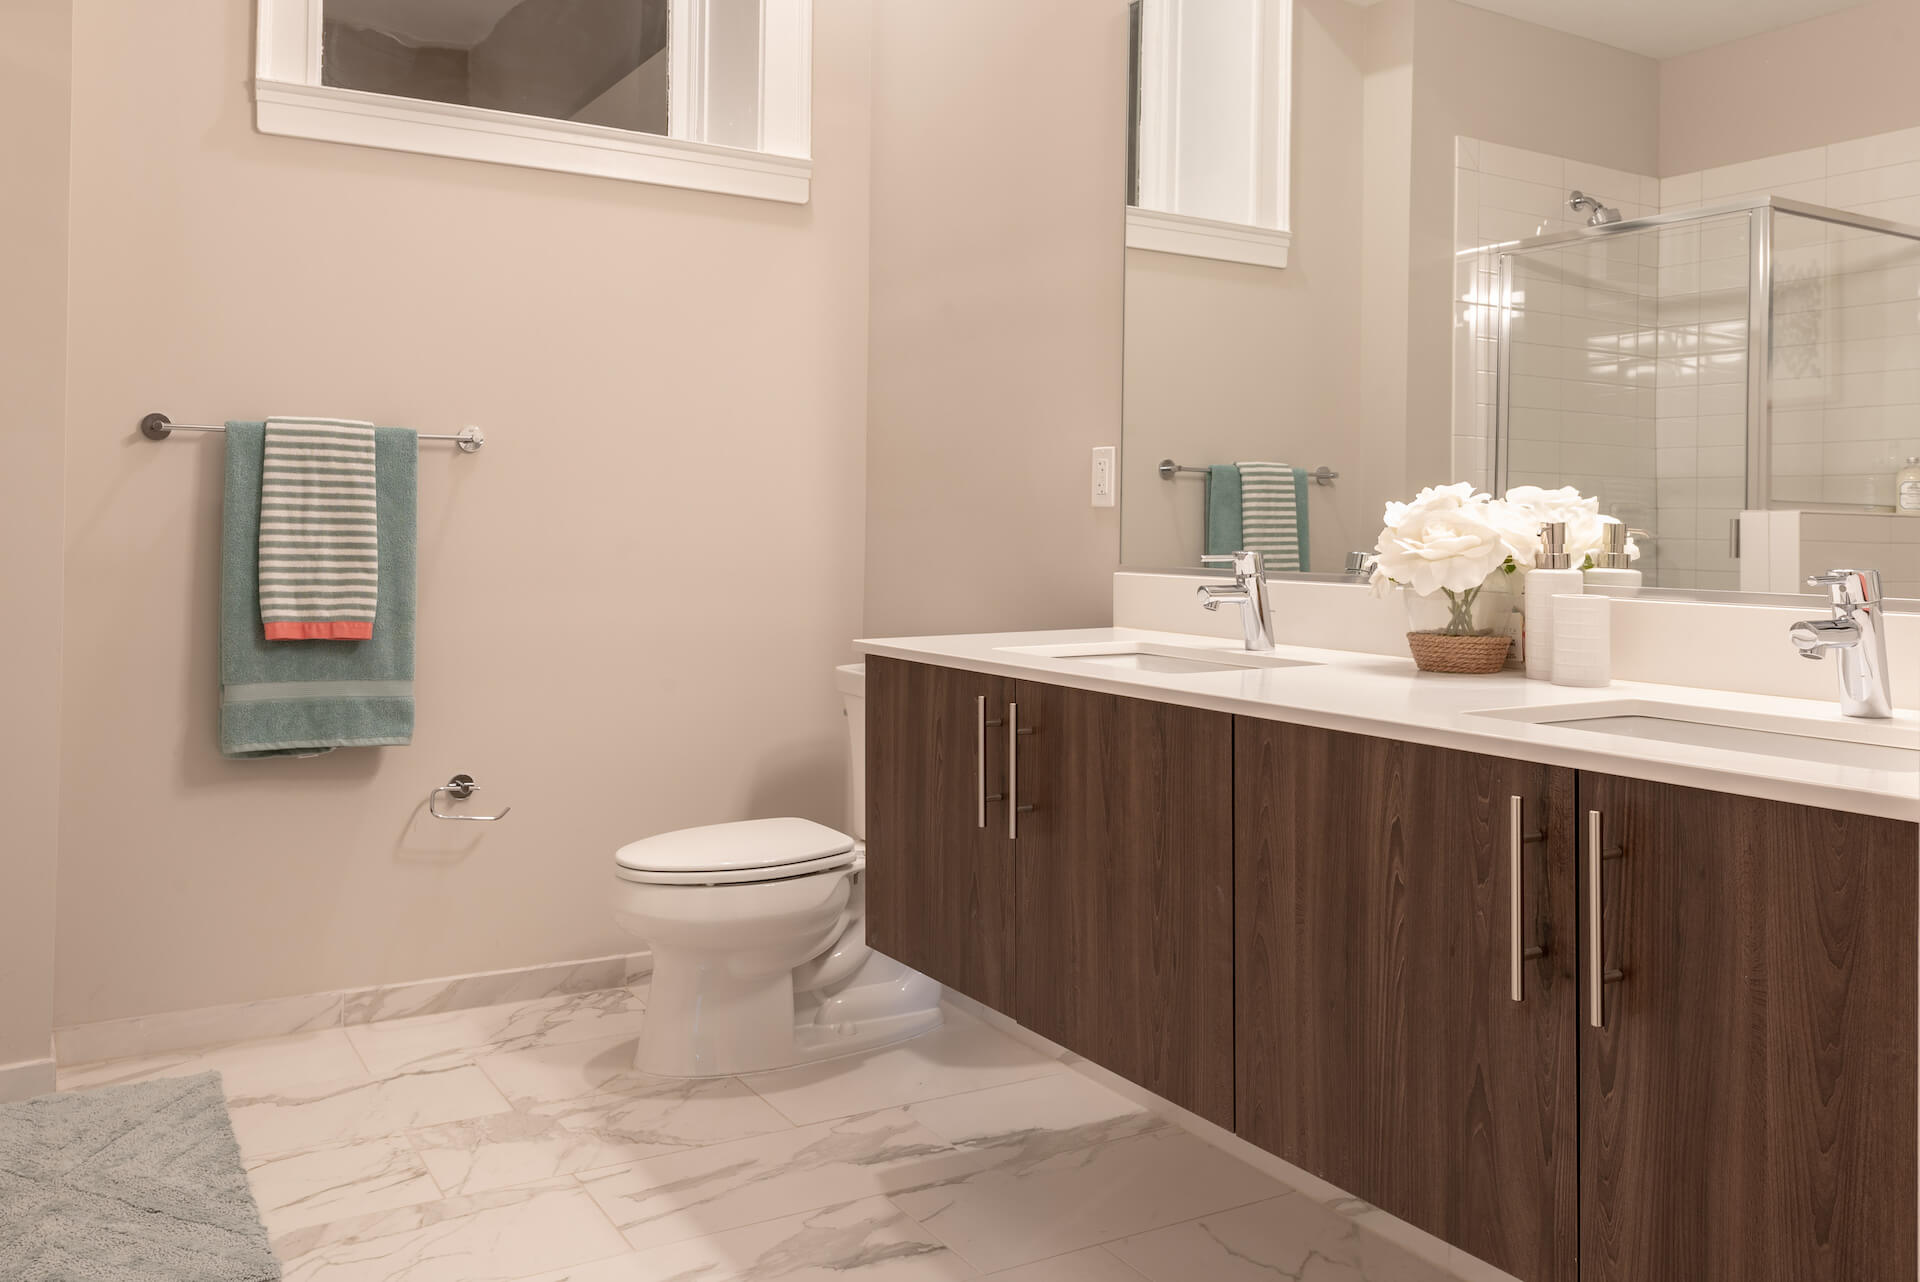 Spacious bathroom with custom double vanity, bathtub, glass shower, and marble style tile.